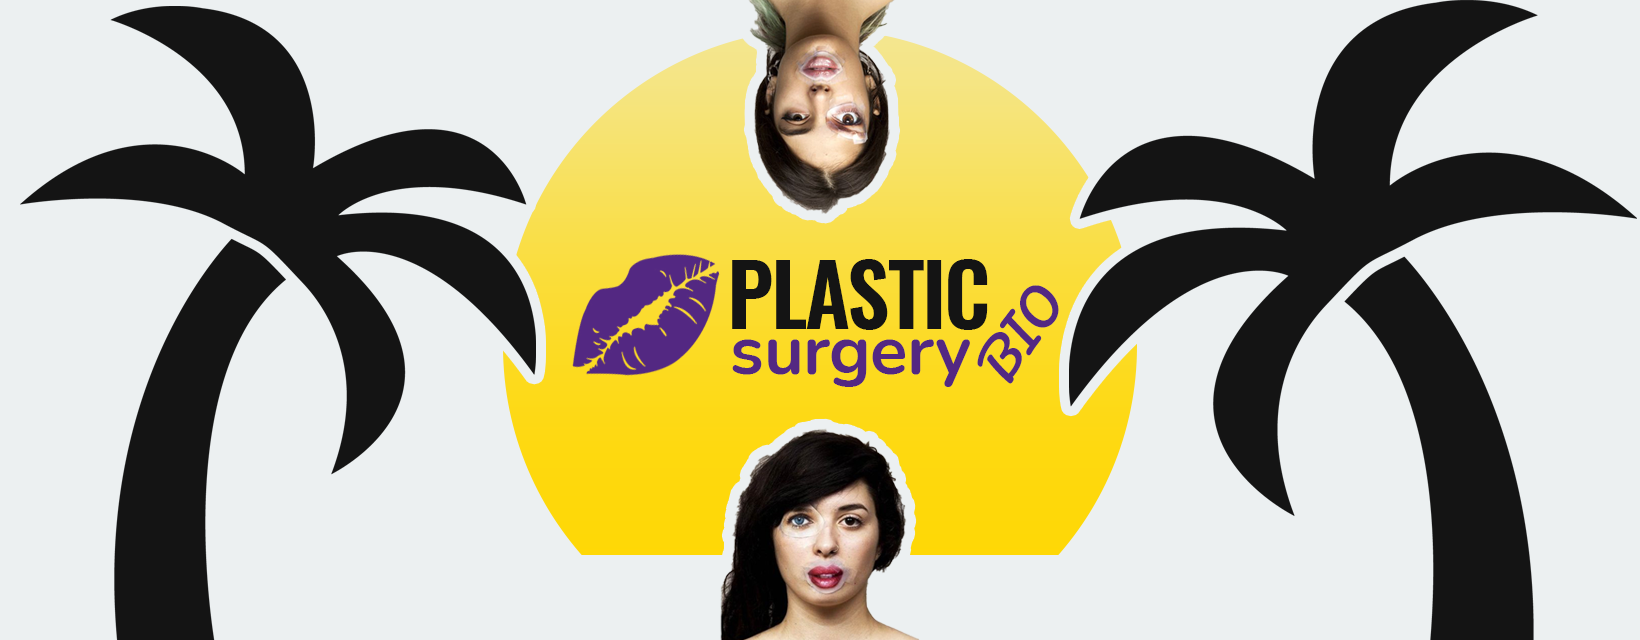 Plastic Surgery Bio